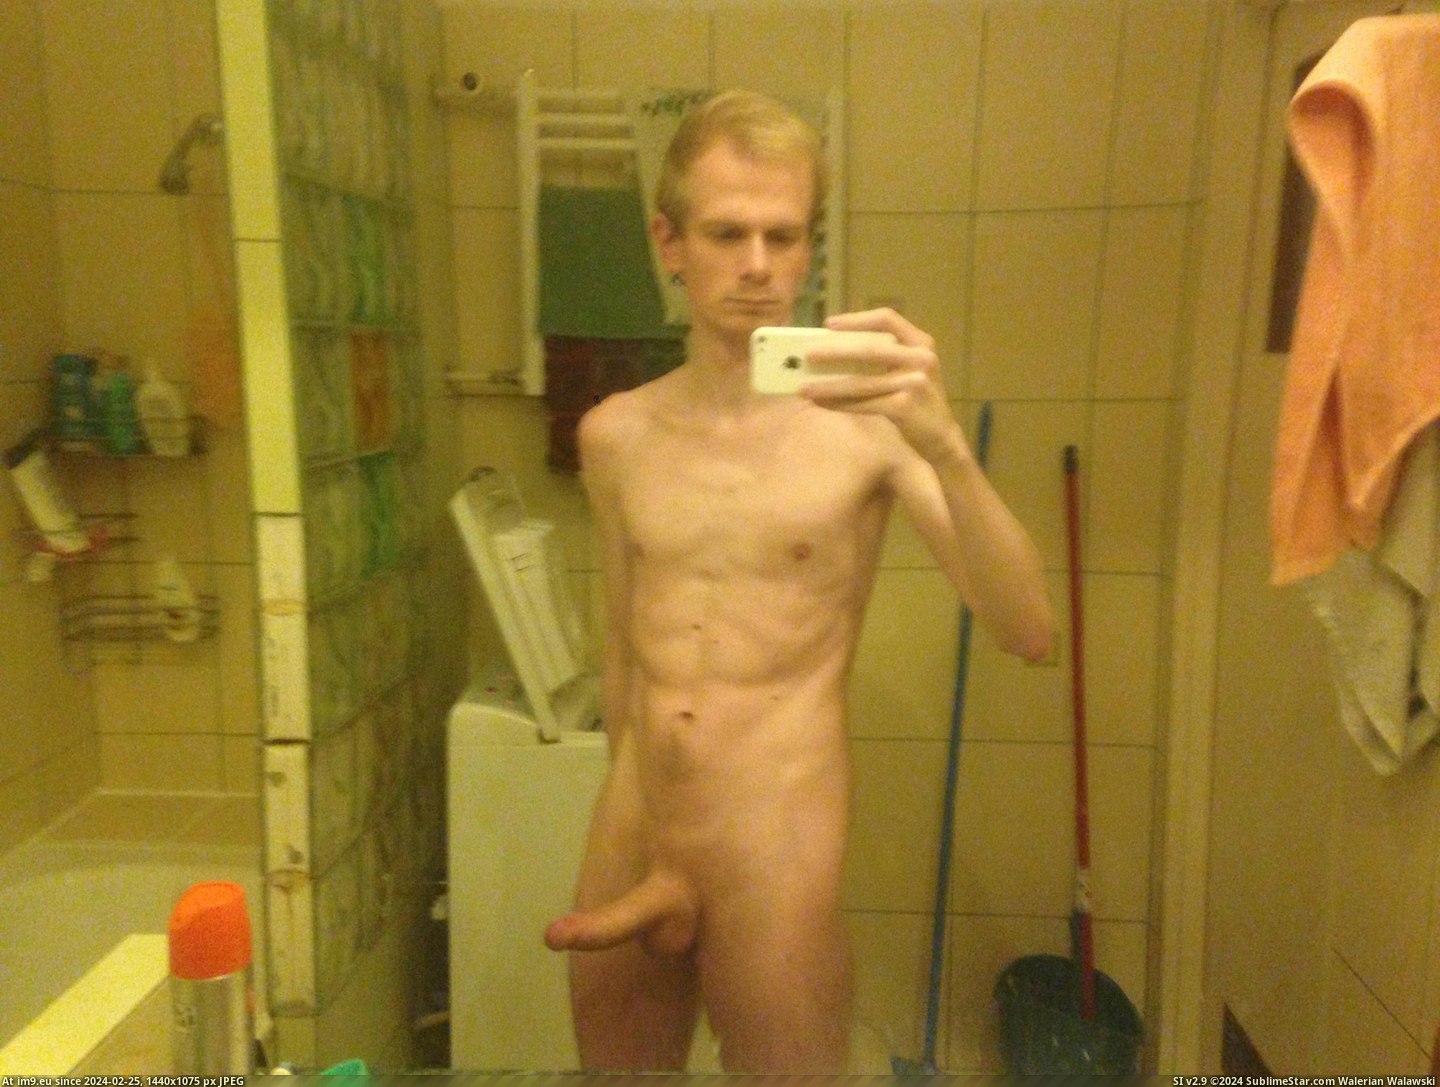 #Nude #Dick #Boner #Male #Penis IMG_0692[1] Pic. (Image of album Instant Upload))